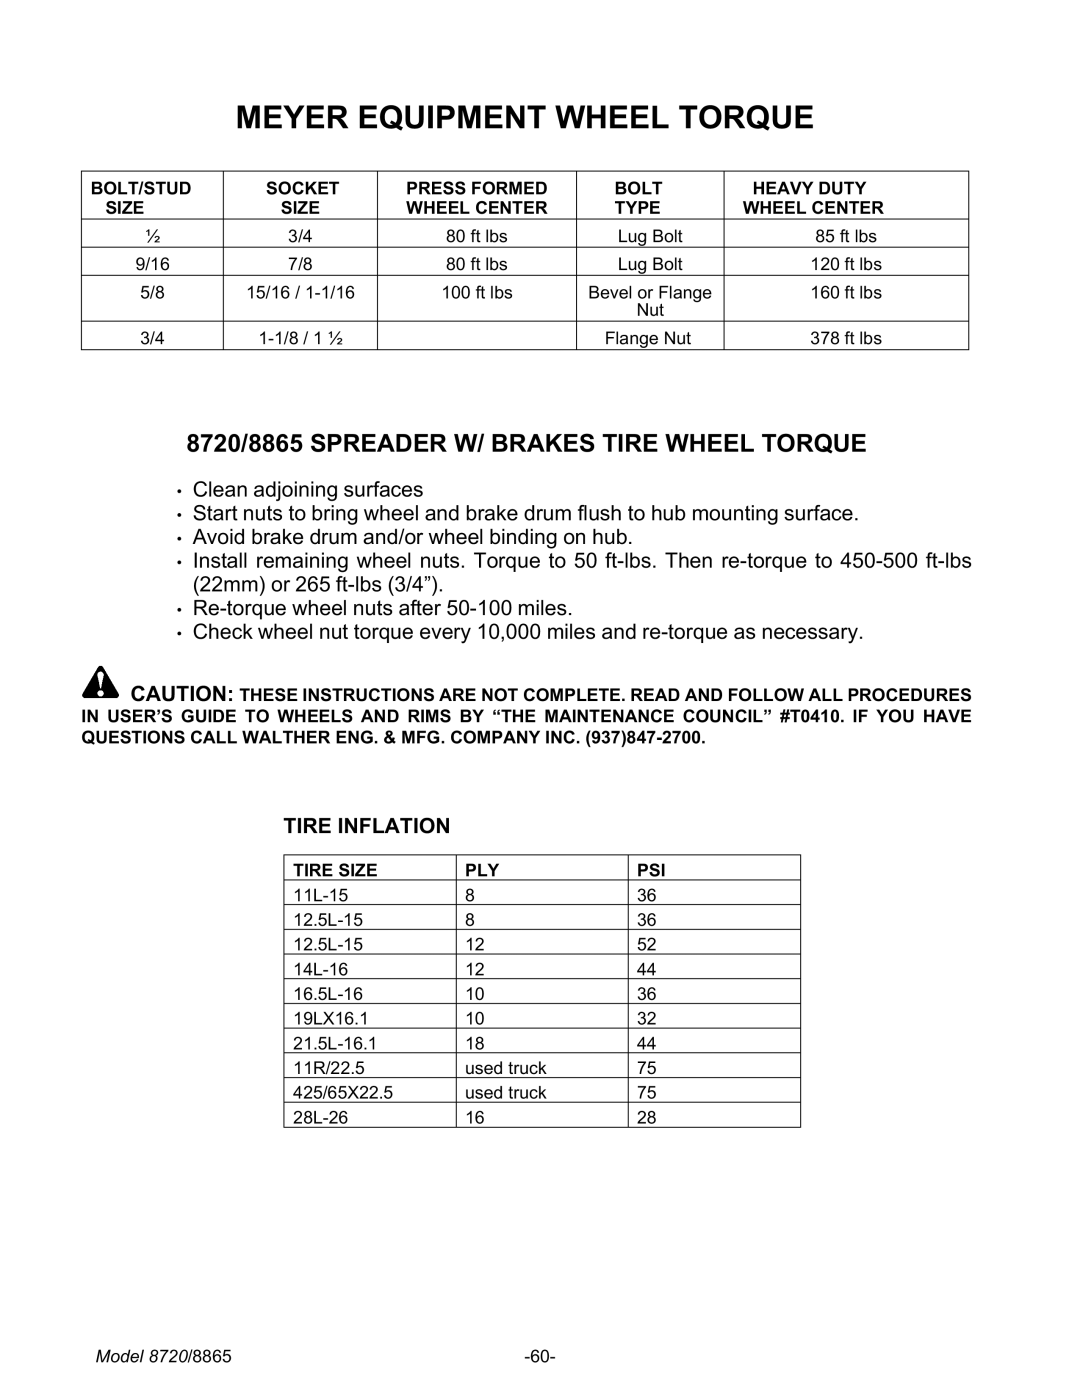 Meyer manual Meyer Equipment Wheel Torque, 8720/8865 Spreader W/ Brakes Tire Wheel Torque, Tire Size PLY PSI 